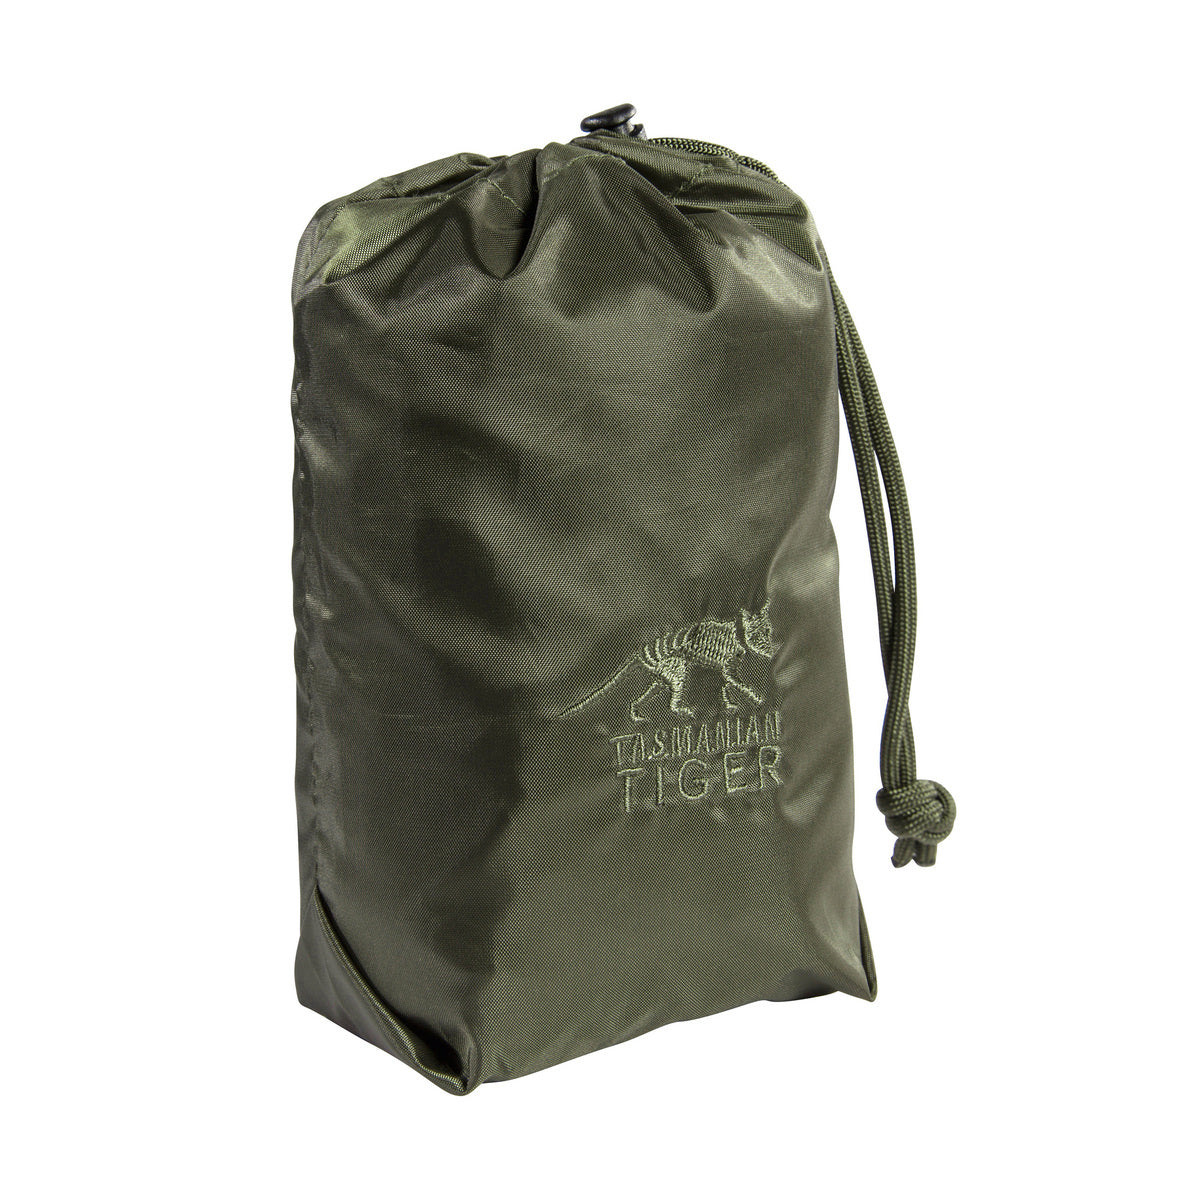 Tasmanian Tiger Raincover XL Backpack Rain Cover Olive Tactical Gear Australia Supplier Distributor Dealer